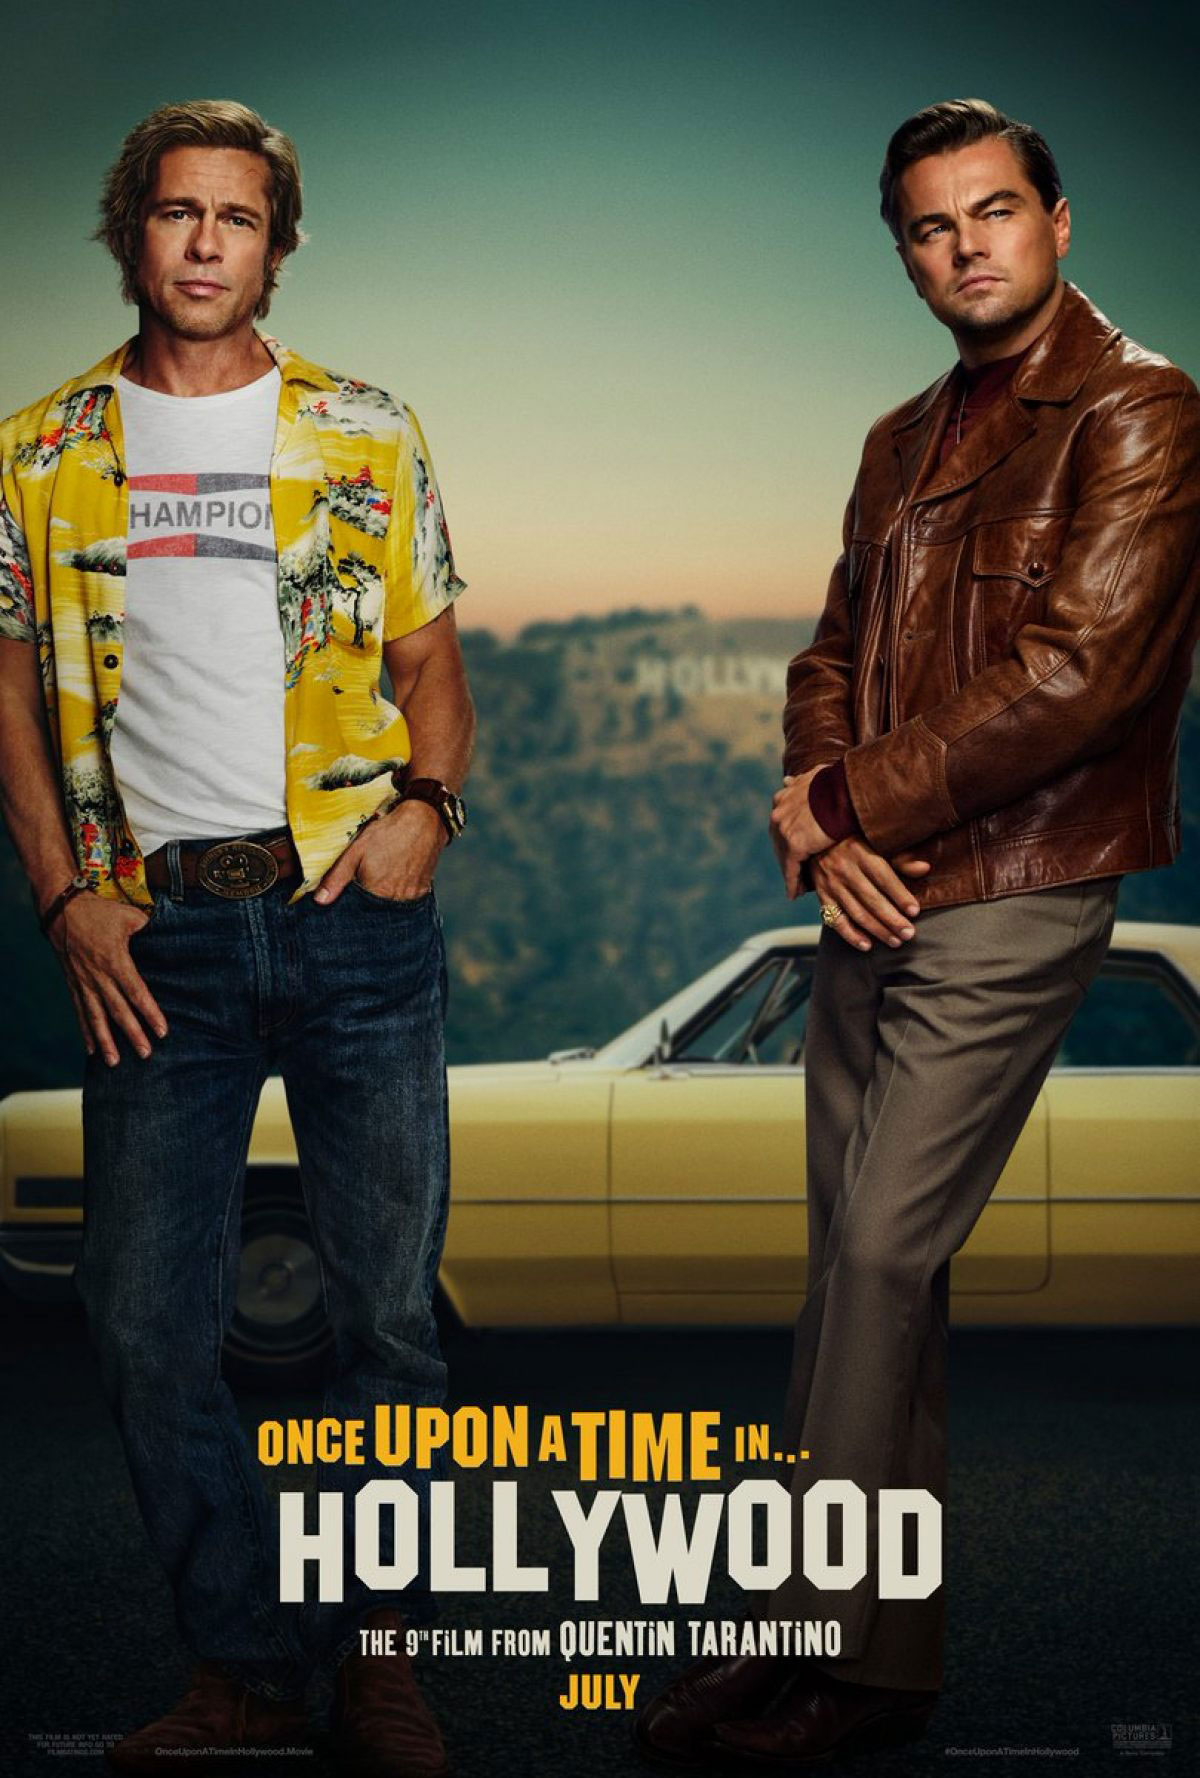 Primer poster oficial de Once Upon a Time in Hollywood de Quentin Tarantino